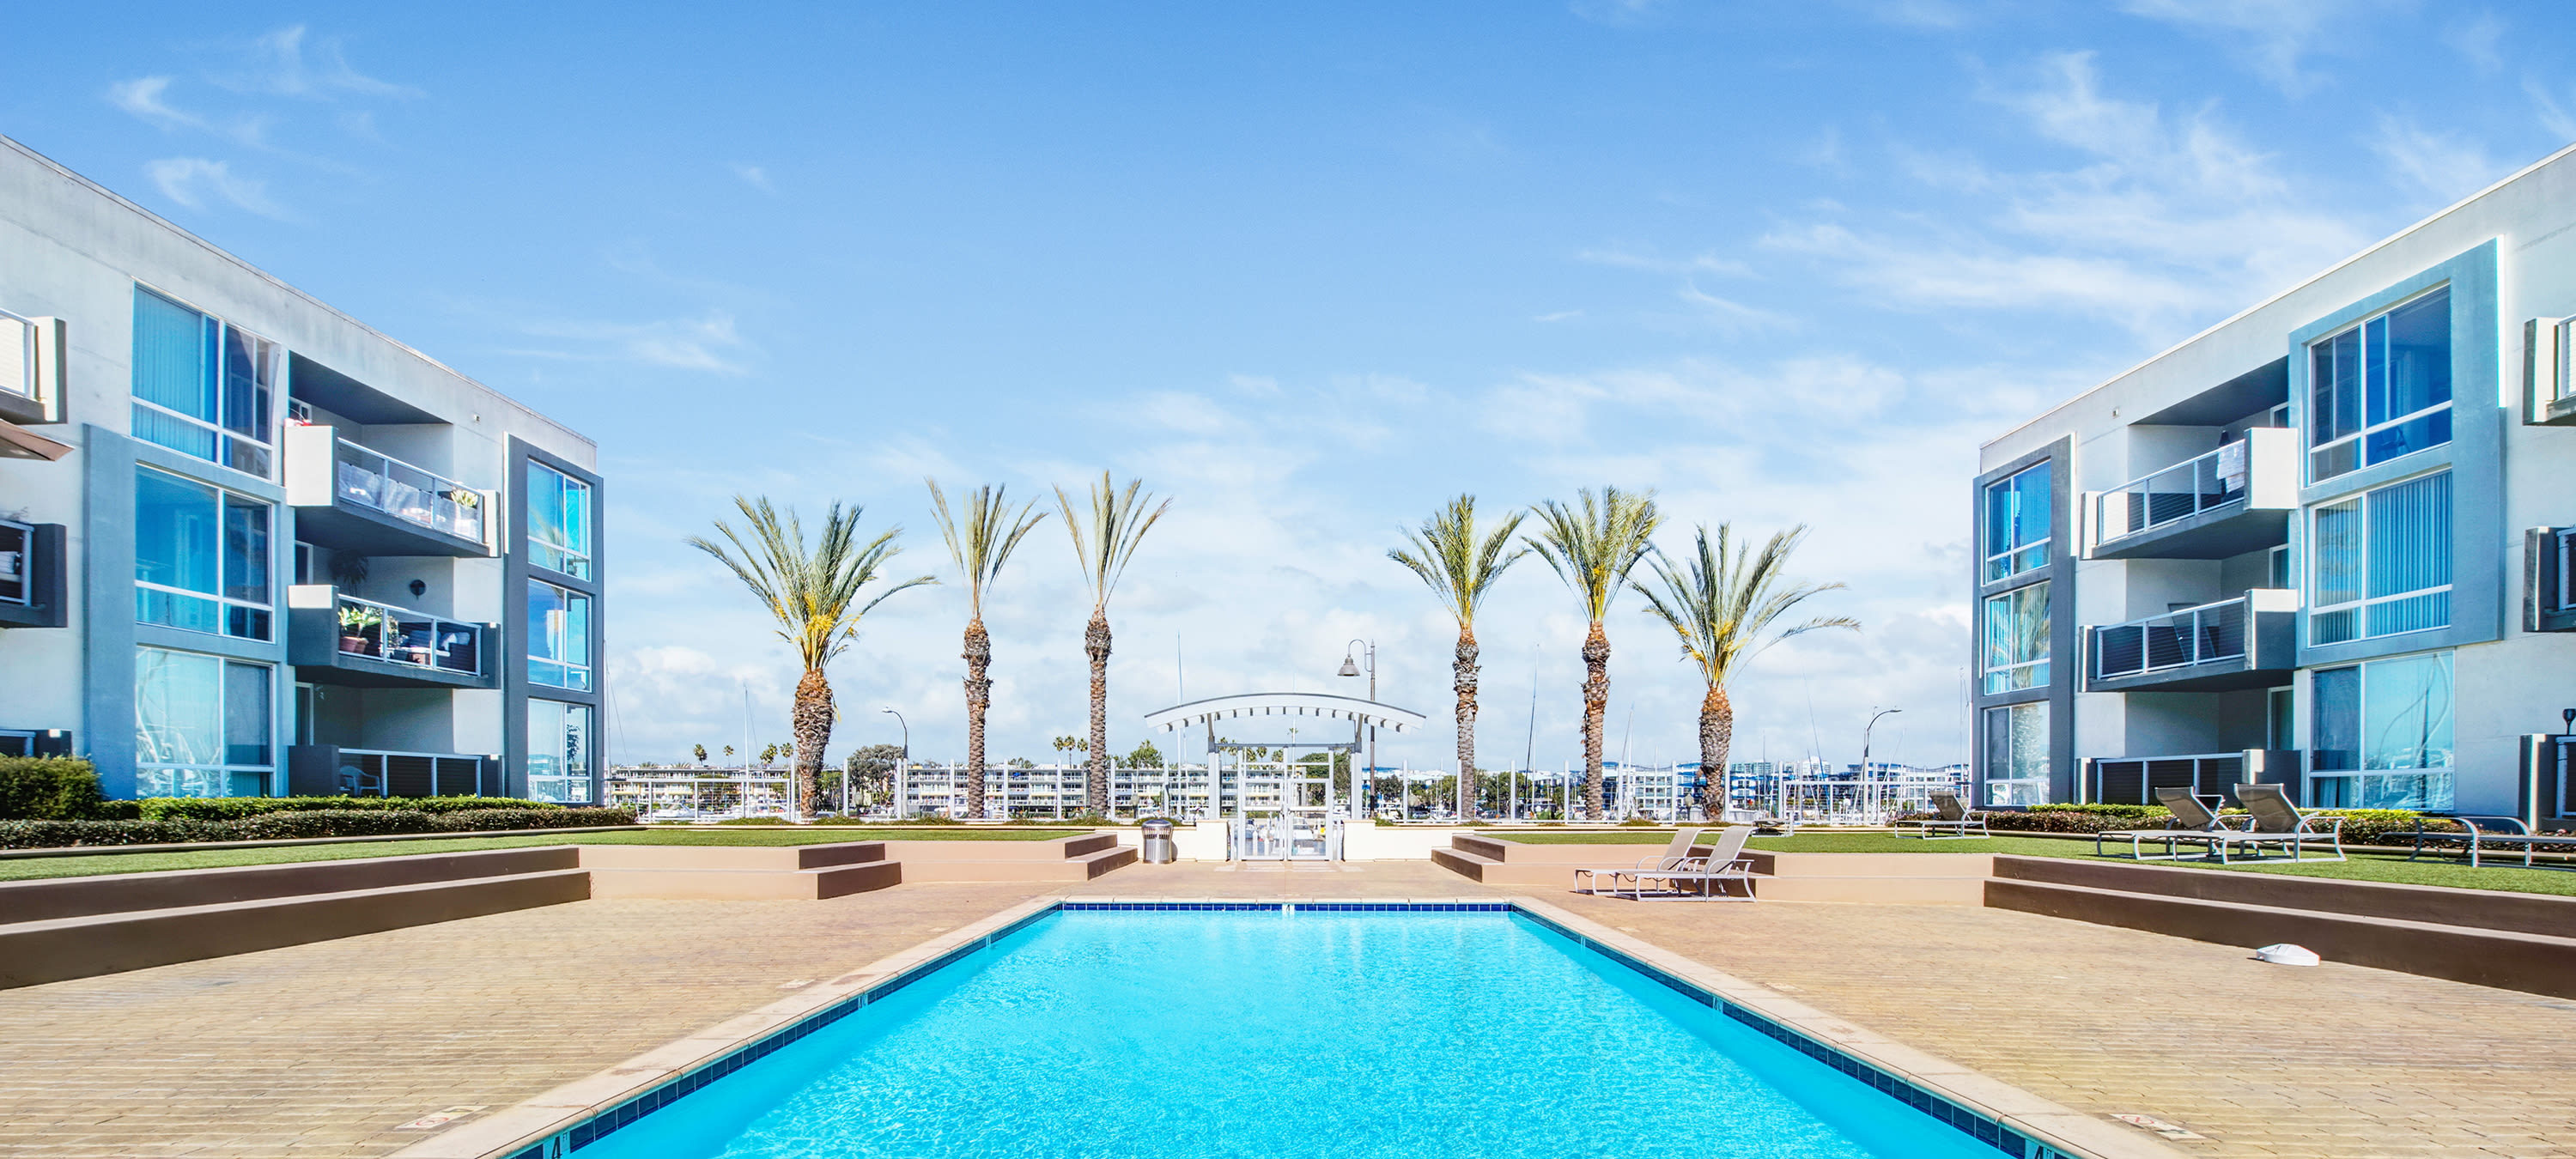 Palm trees and lush landscaping at Waters Edge waterfront apartments at Marina Harbor in Marina del Rey, California